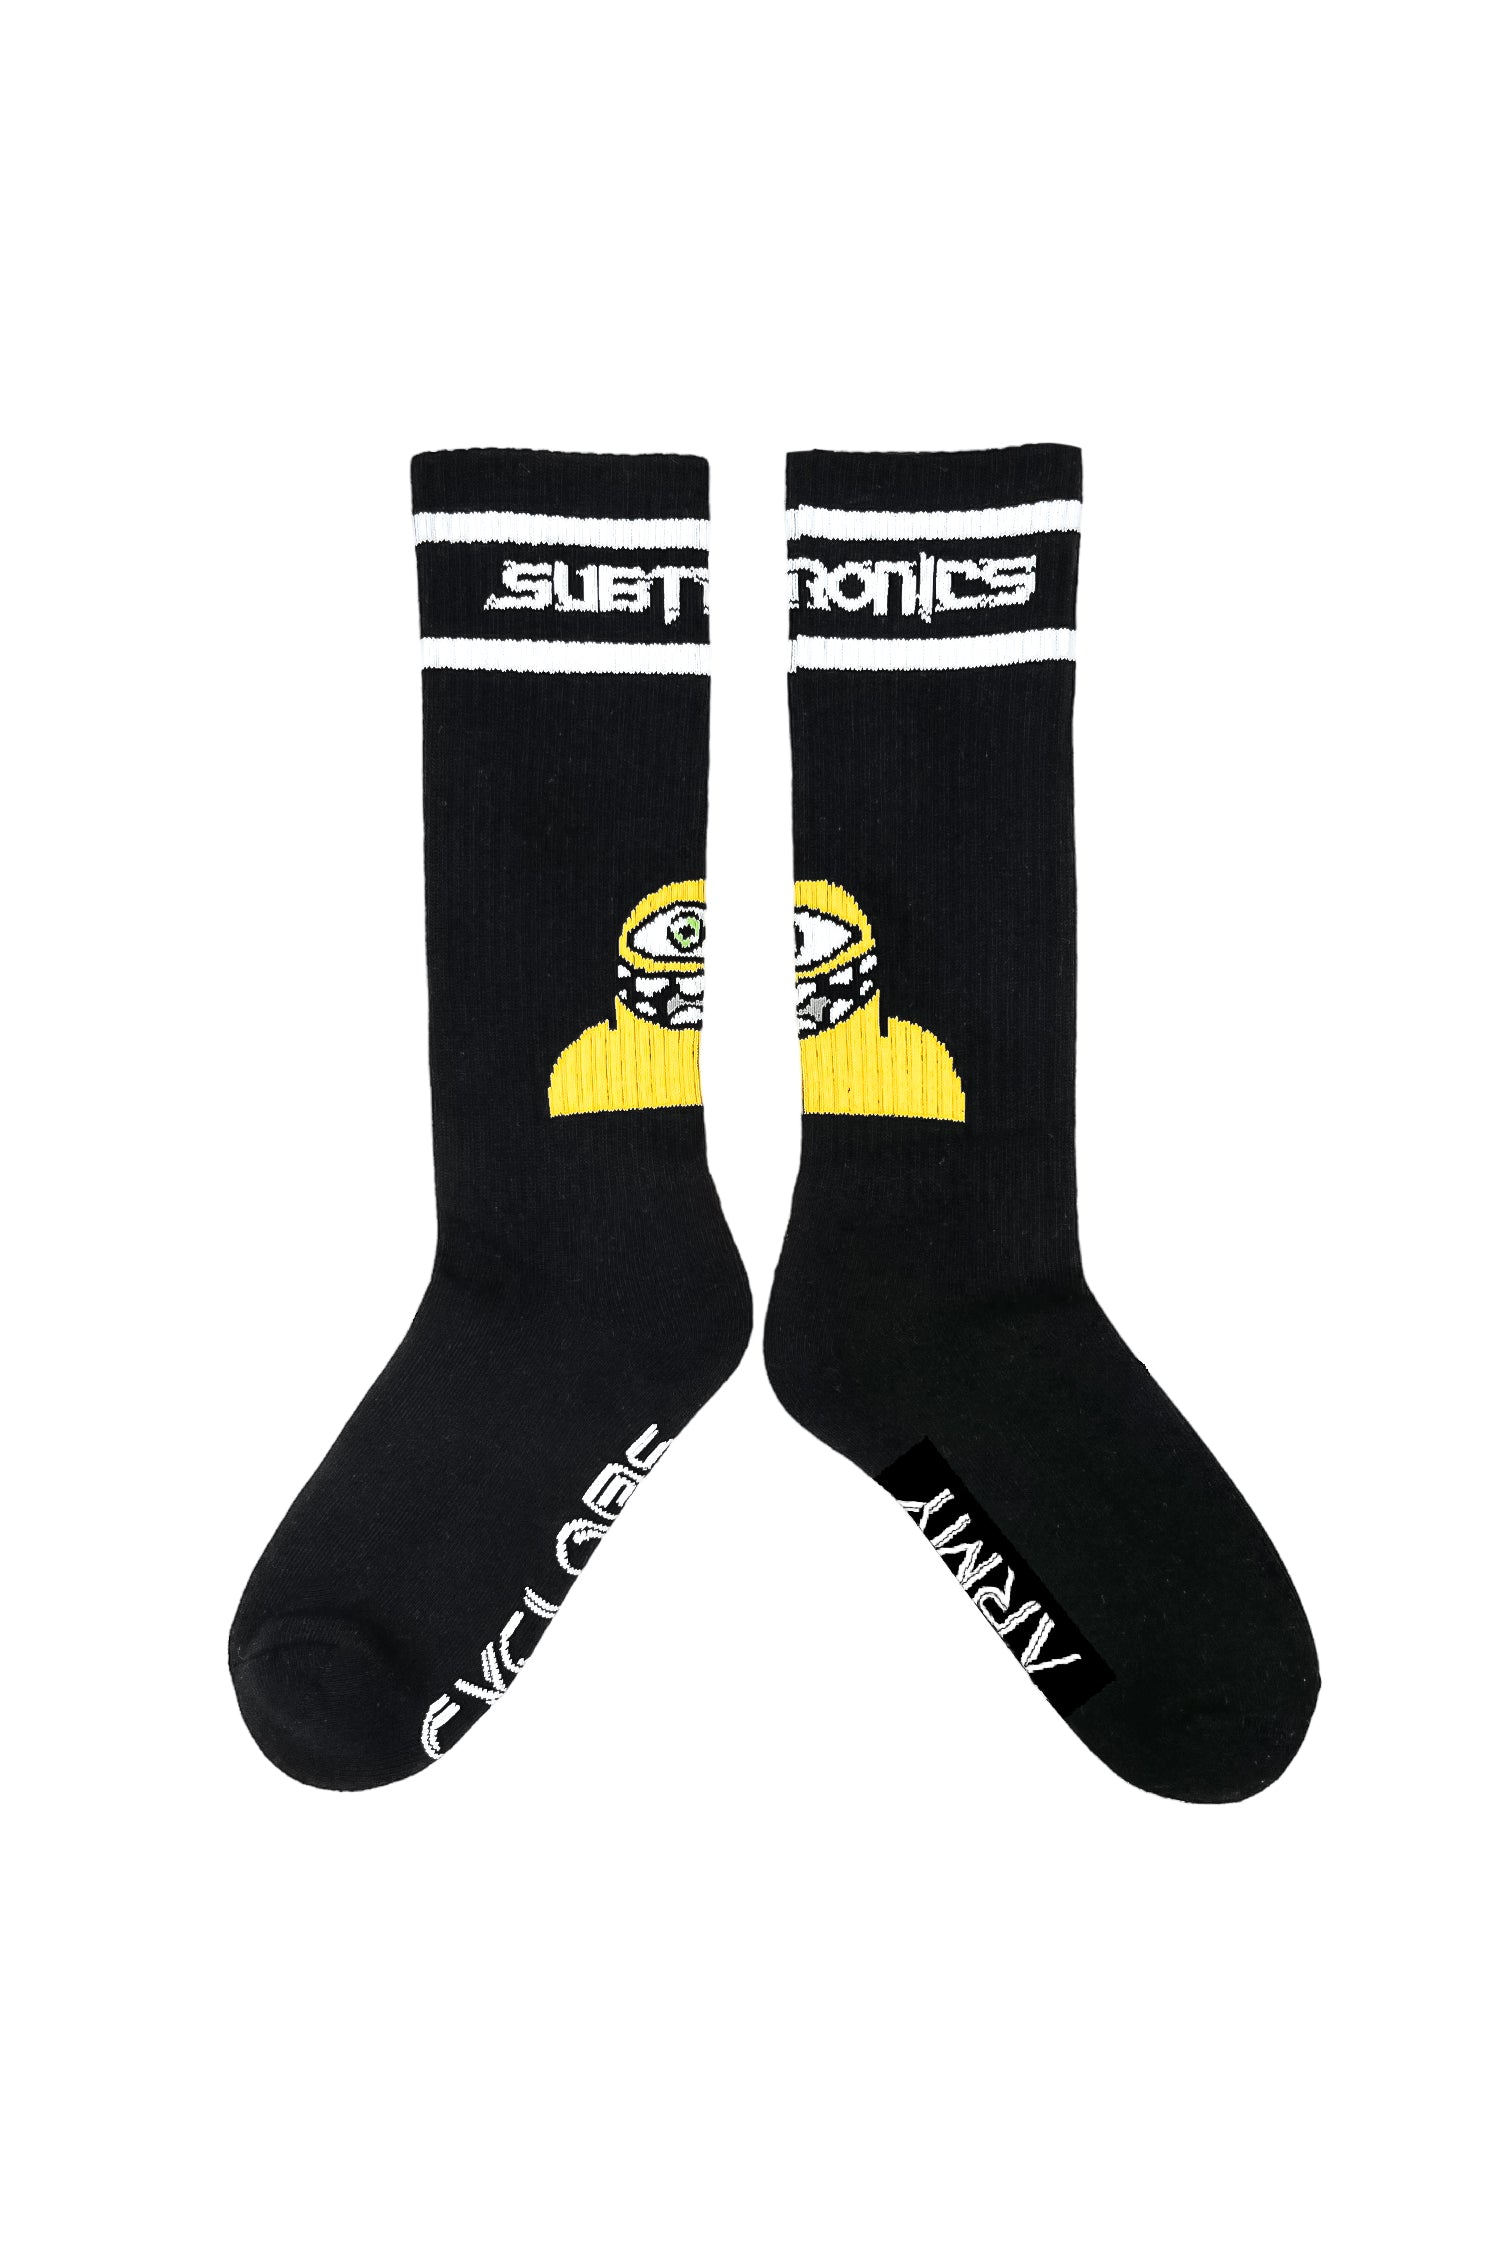 Subtronics - Classic Cyclops Knit Socks